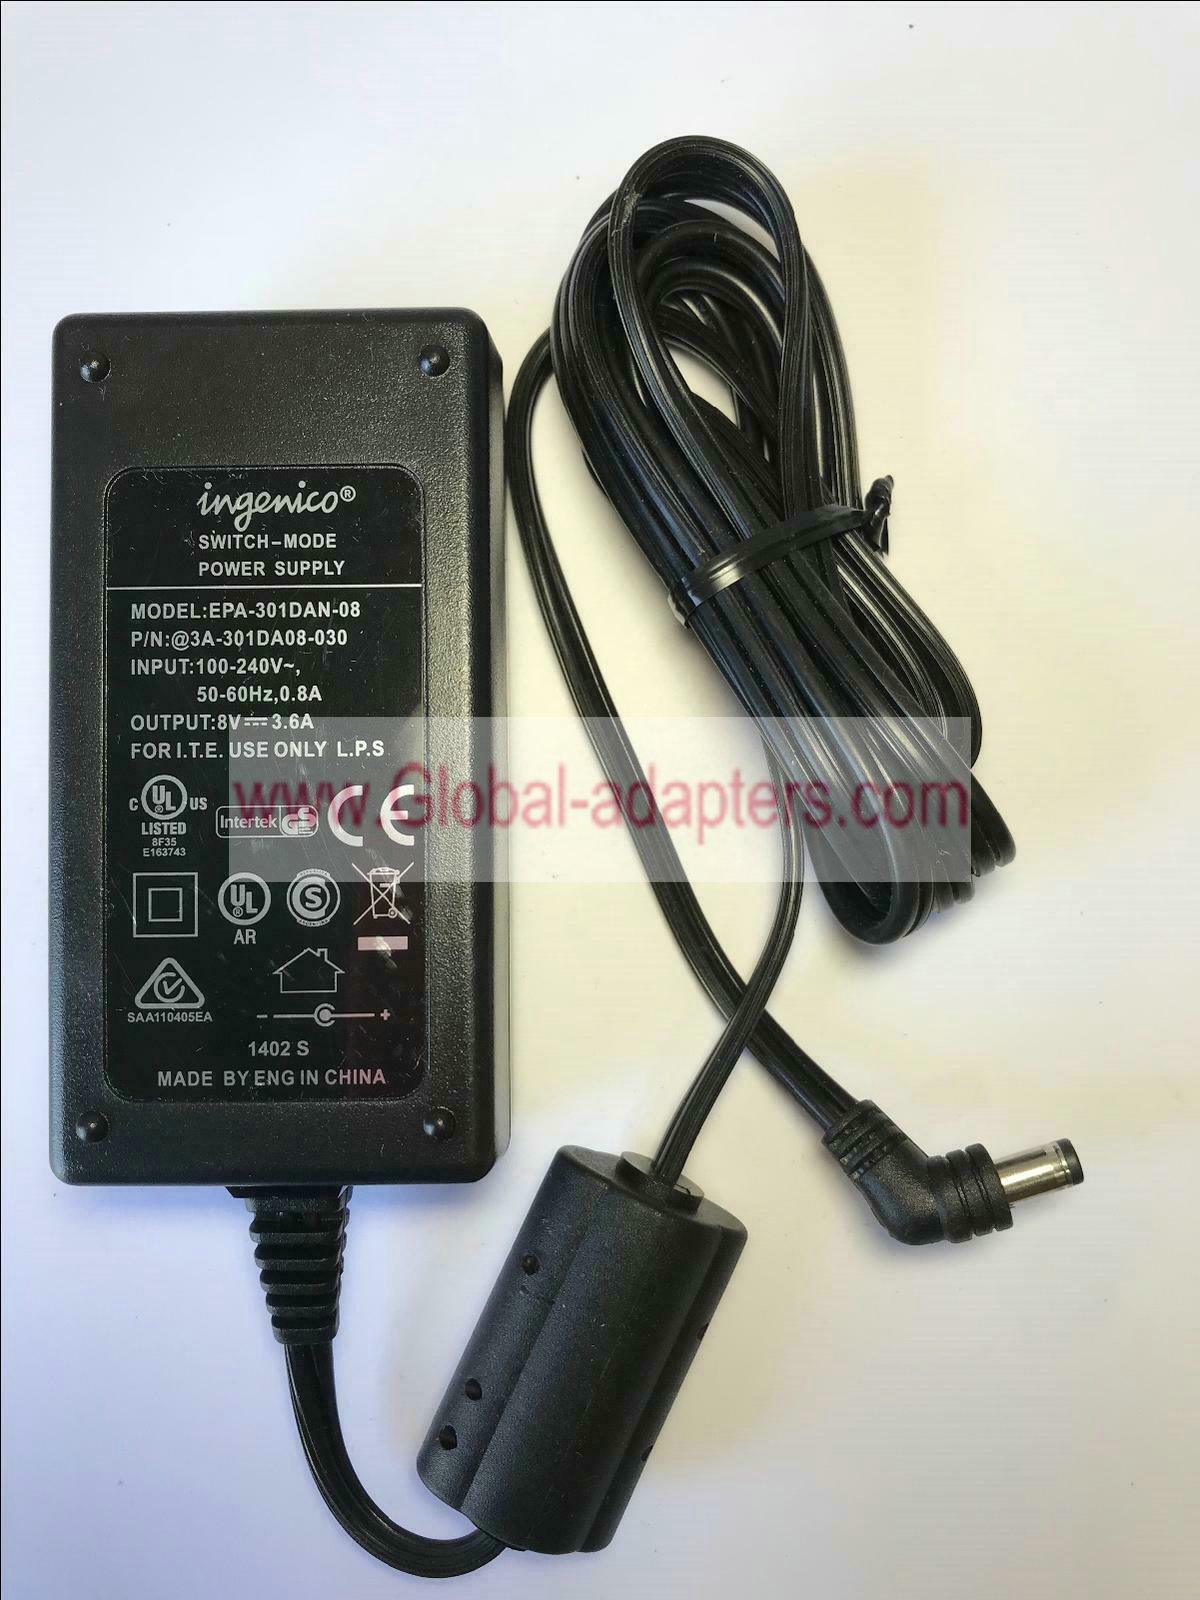 New Ingenico EPA-301DAN-08 3A-301DA08-030 Switching Power Supply 8V 3.6A